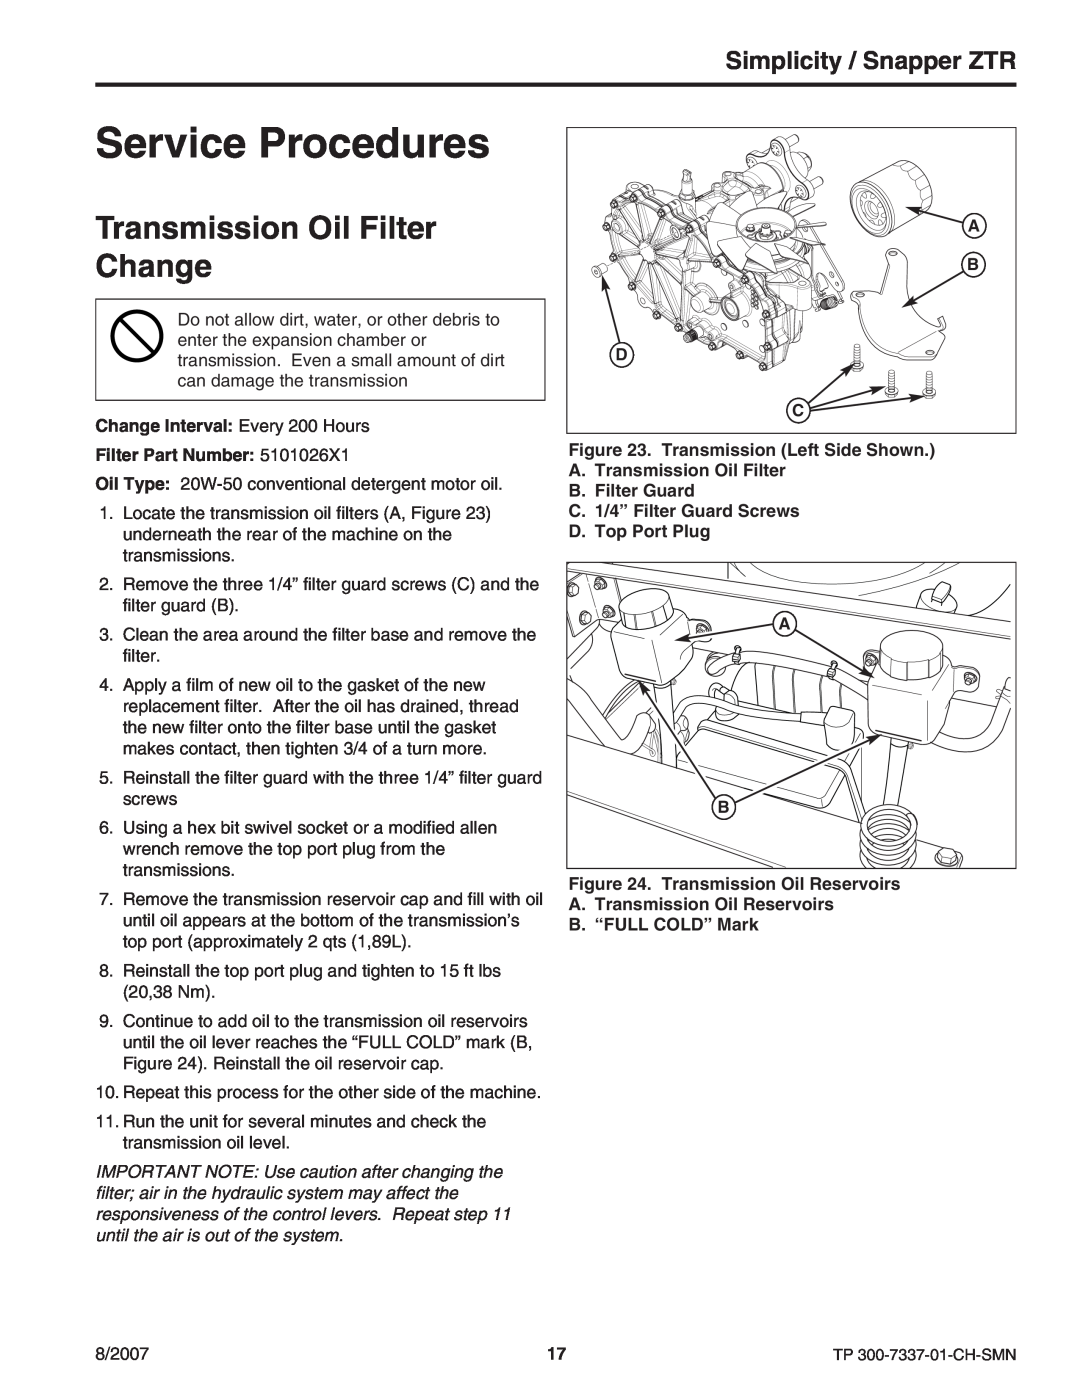 Snapper ZT3000 manual Service Procedures, Transmission Oil Filter Change, Simplicity / Snapper ZTR 